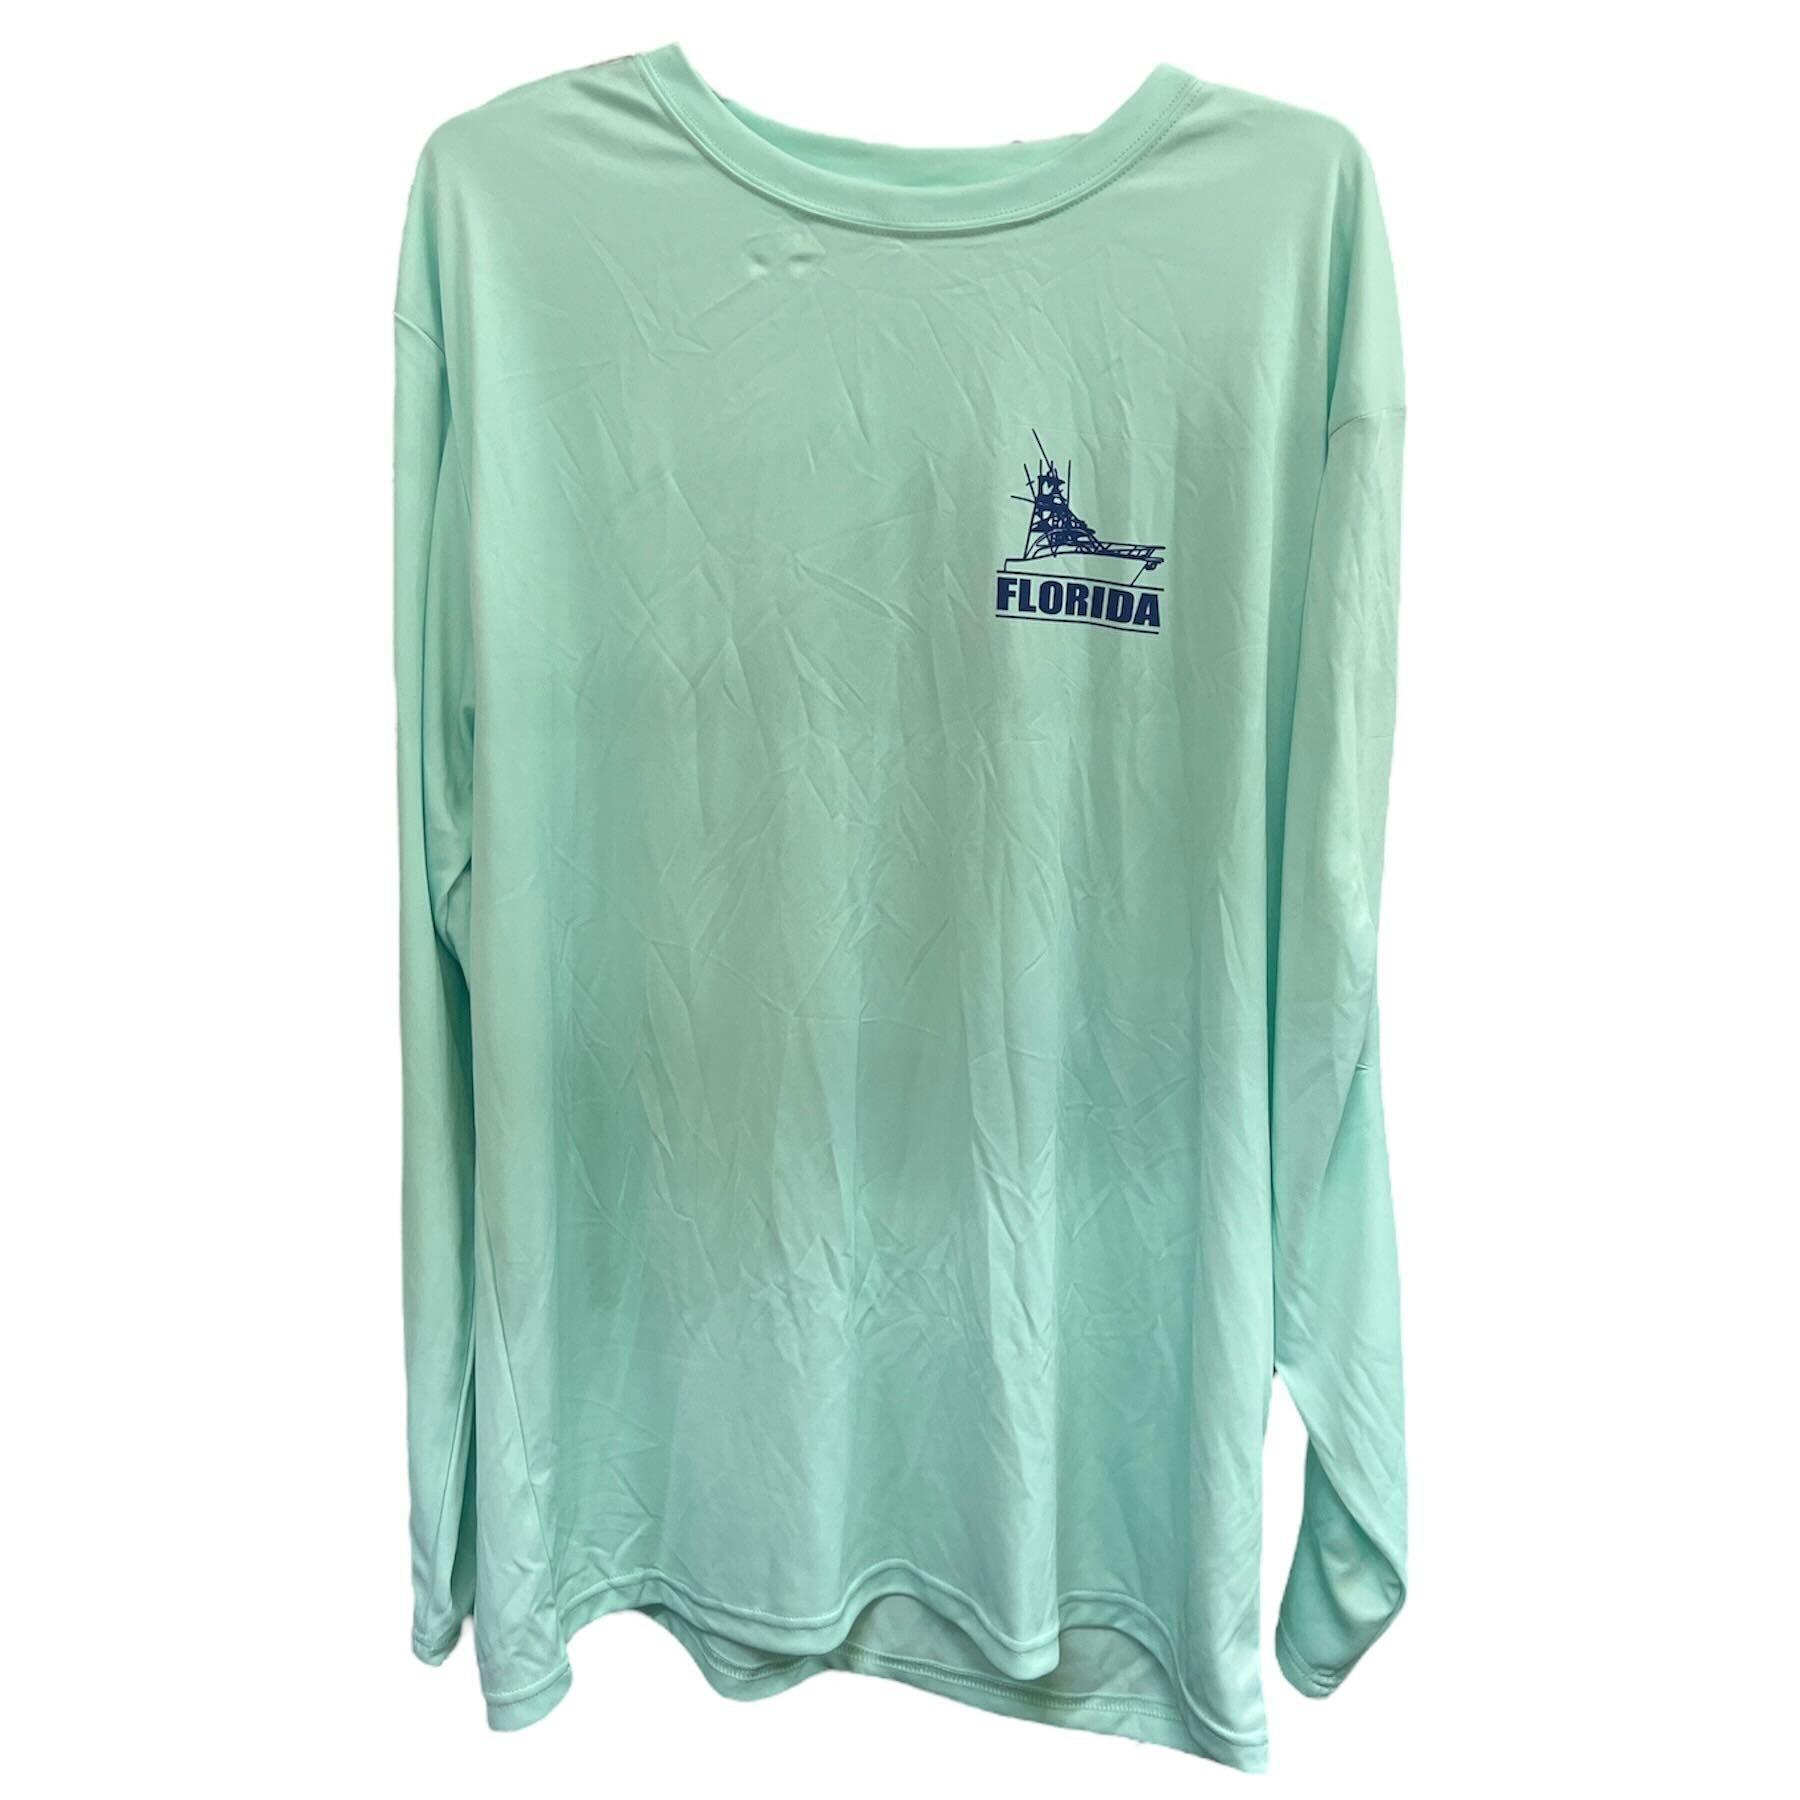 Men's Florida Fishes Light Green Long Sleeve Microfiber Shirt